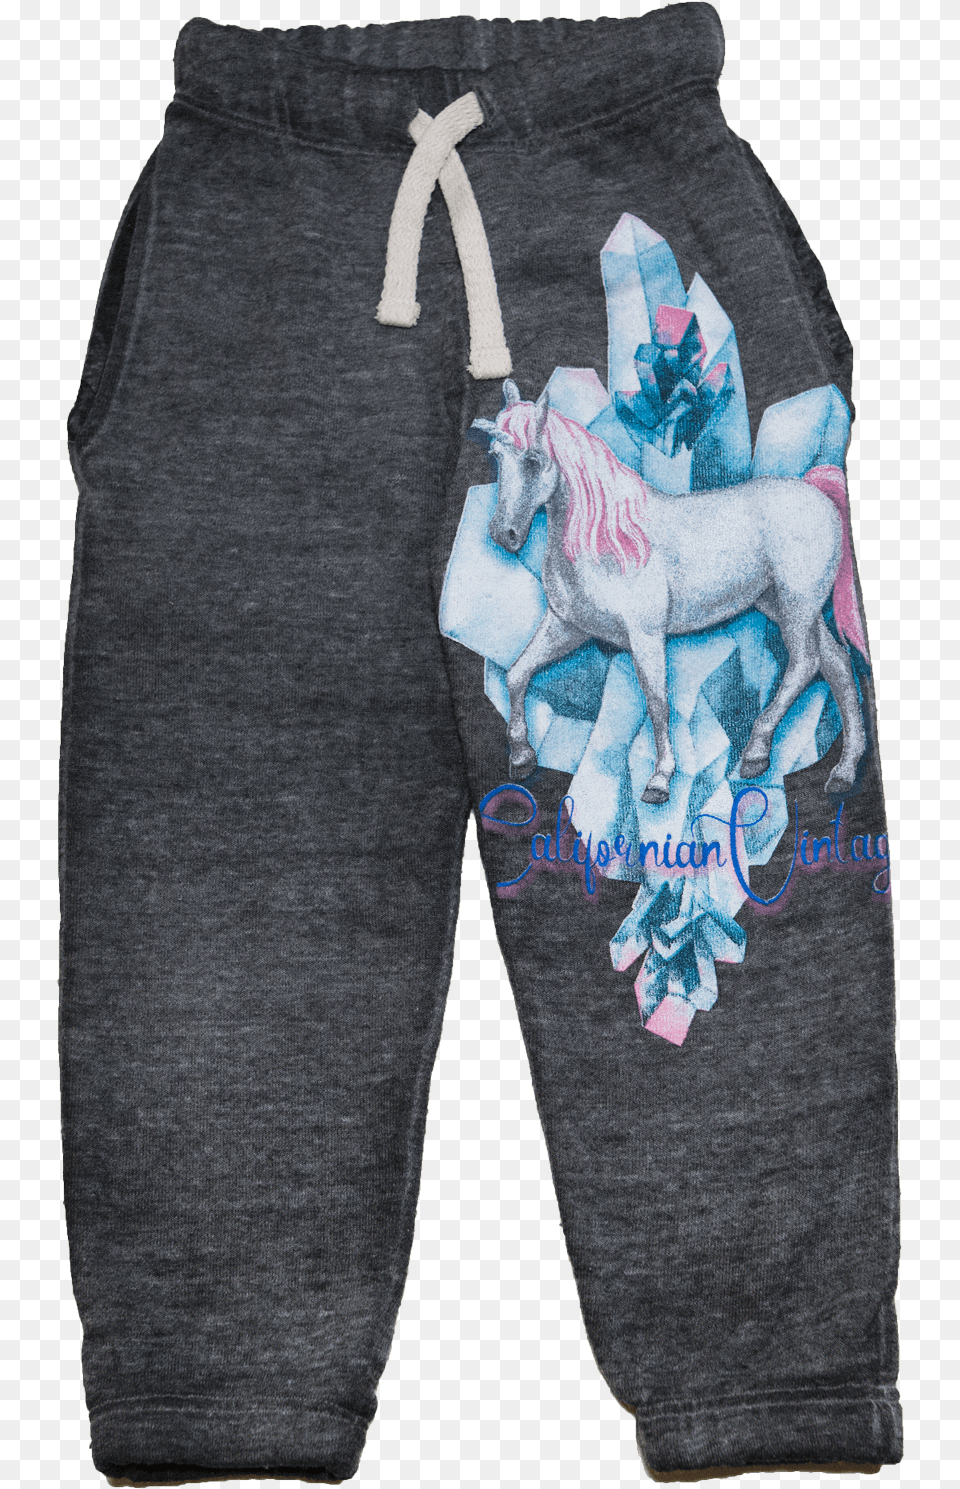 Elephant, Clothing, Pants, Jeans, Shorts Png Image